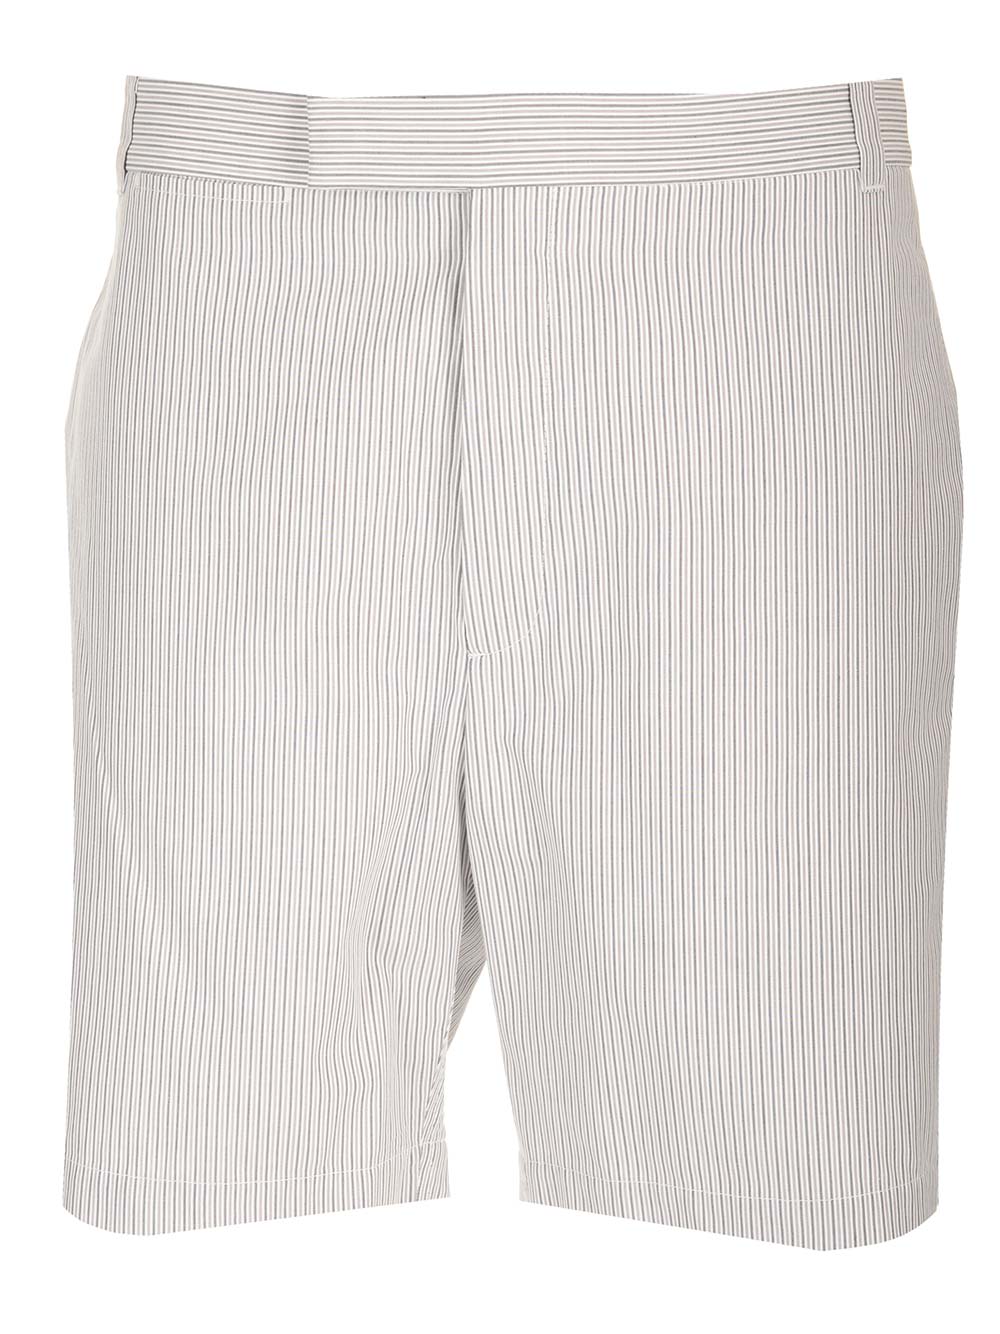 Striped Cotton Bermuda Shorts